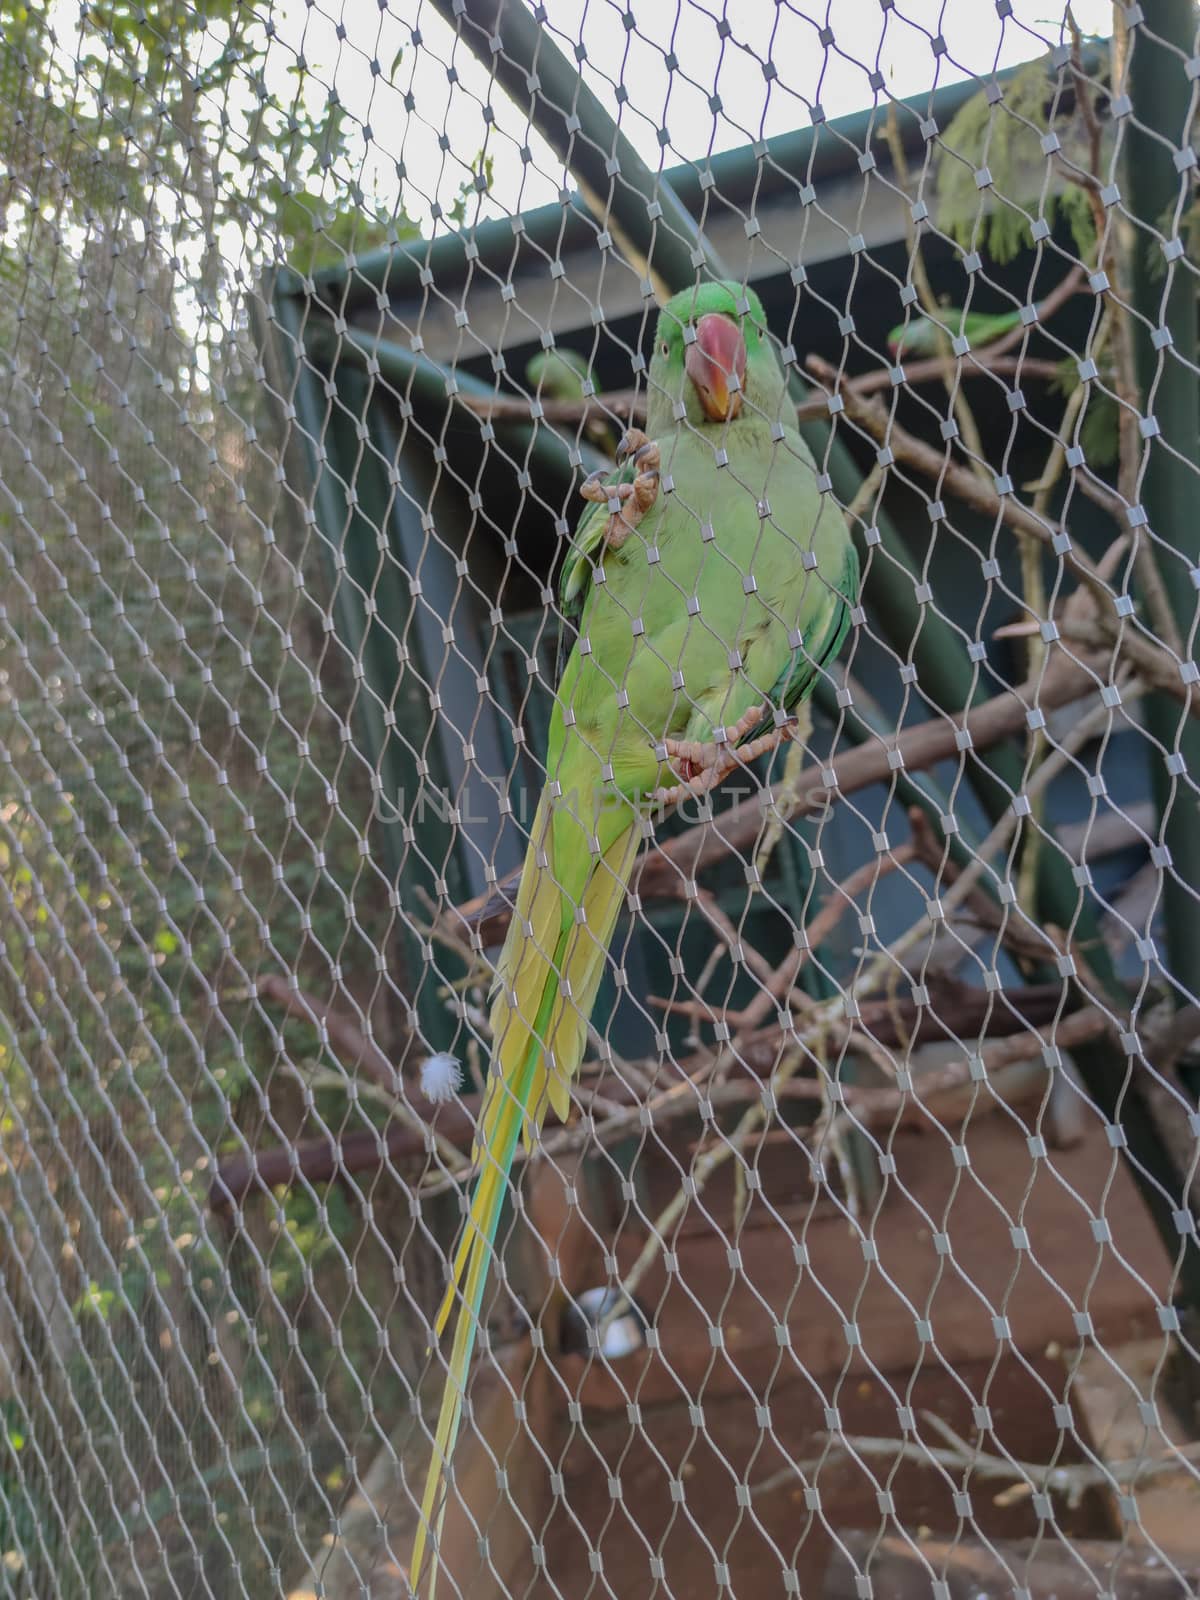 wonderful bird sitting in its cage